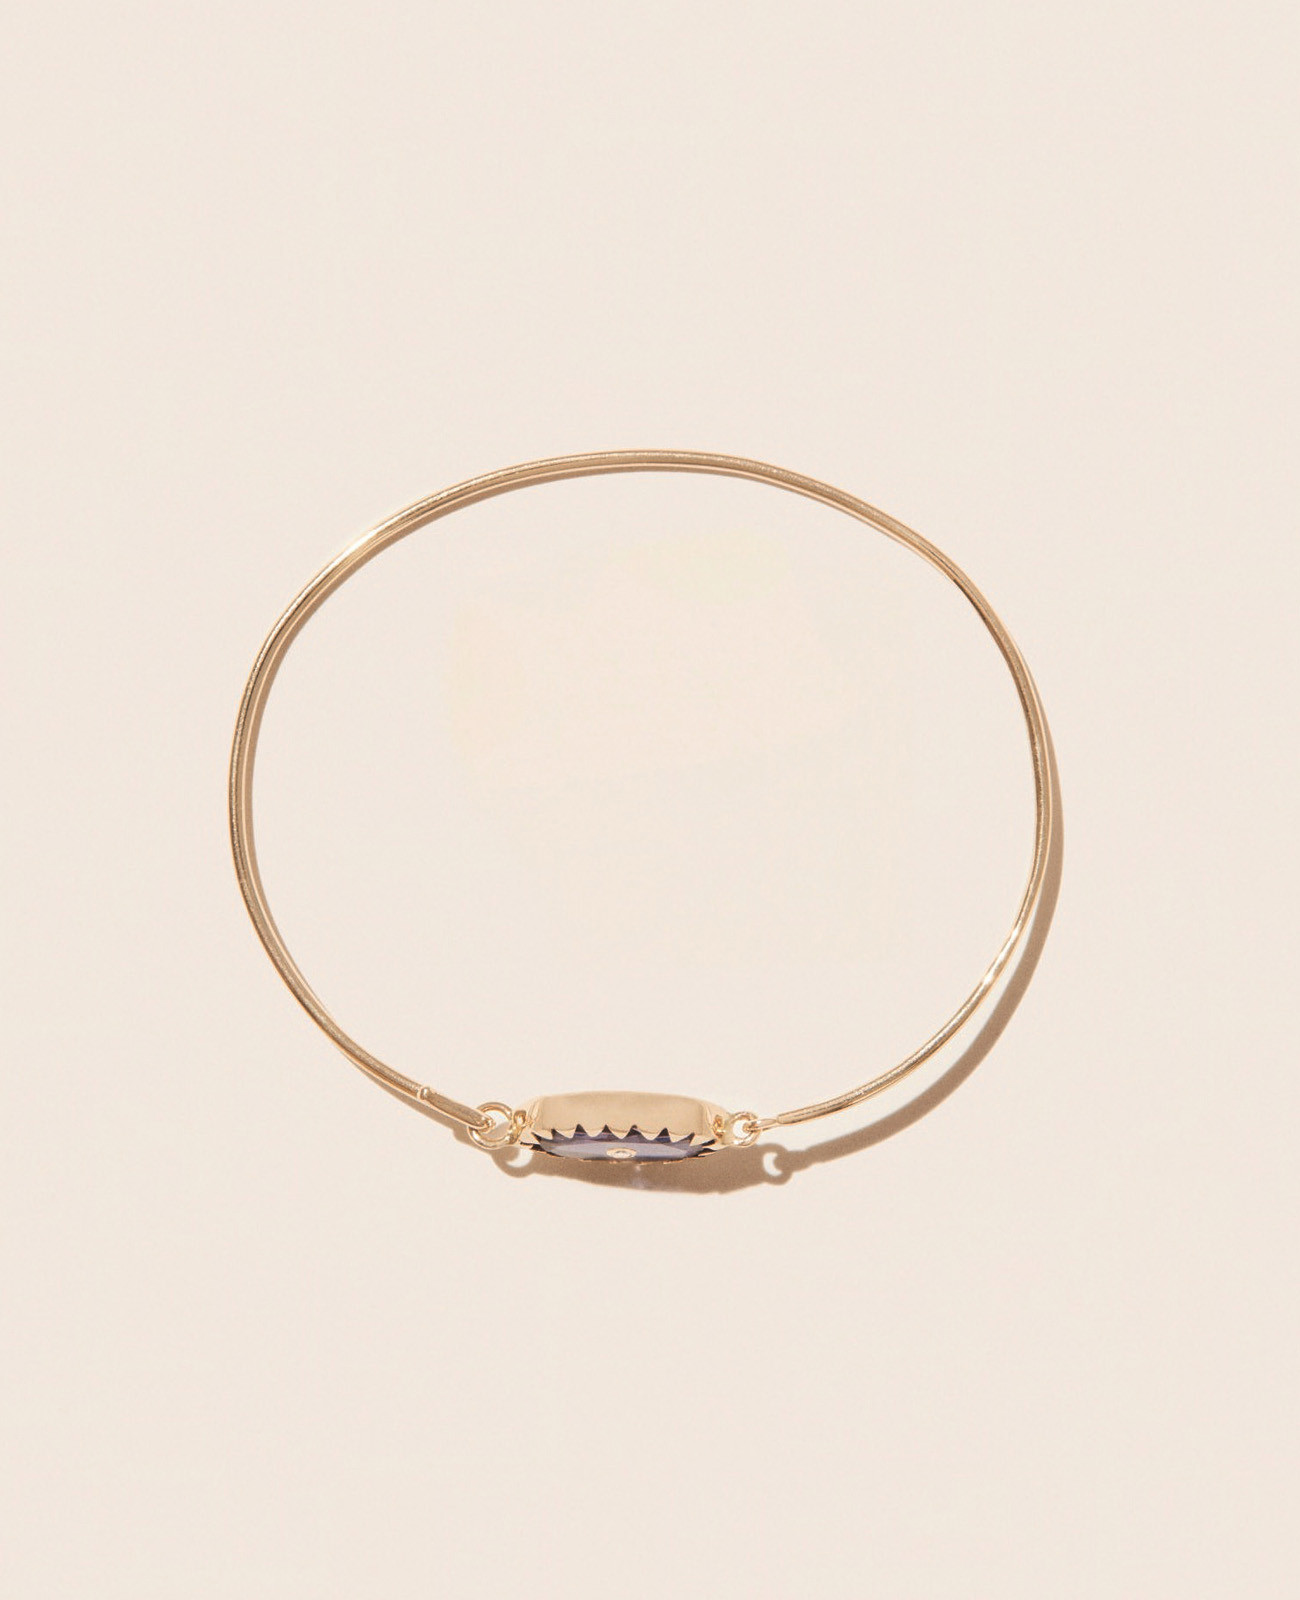 ORSO IOLITE bracelet pascale monvoisin jewelry paris